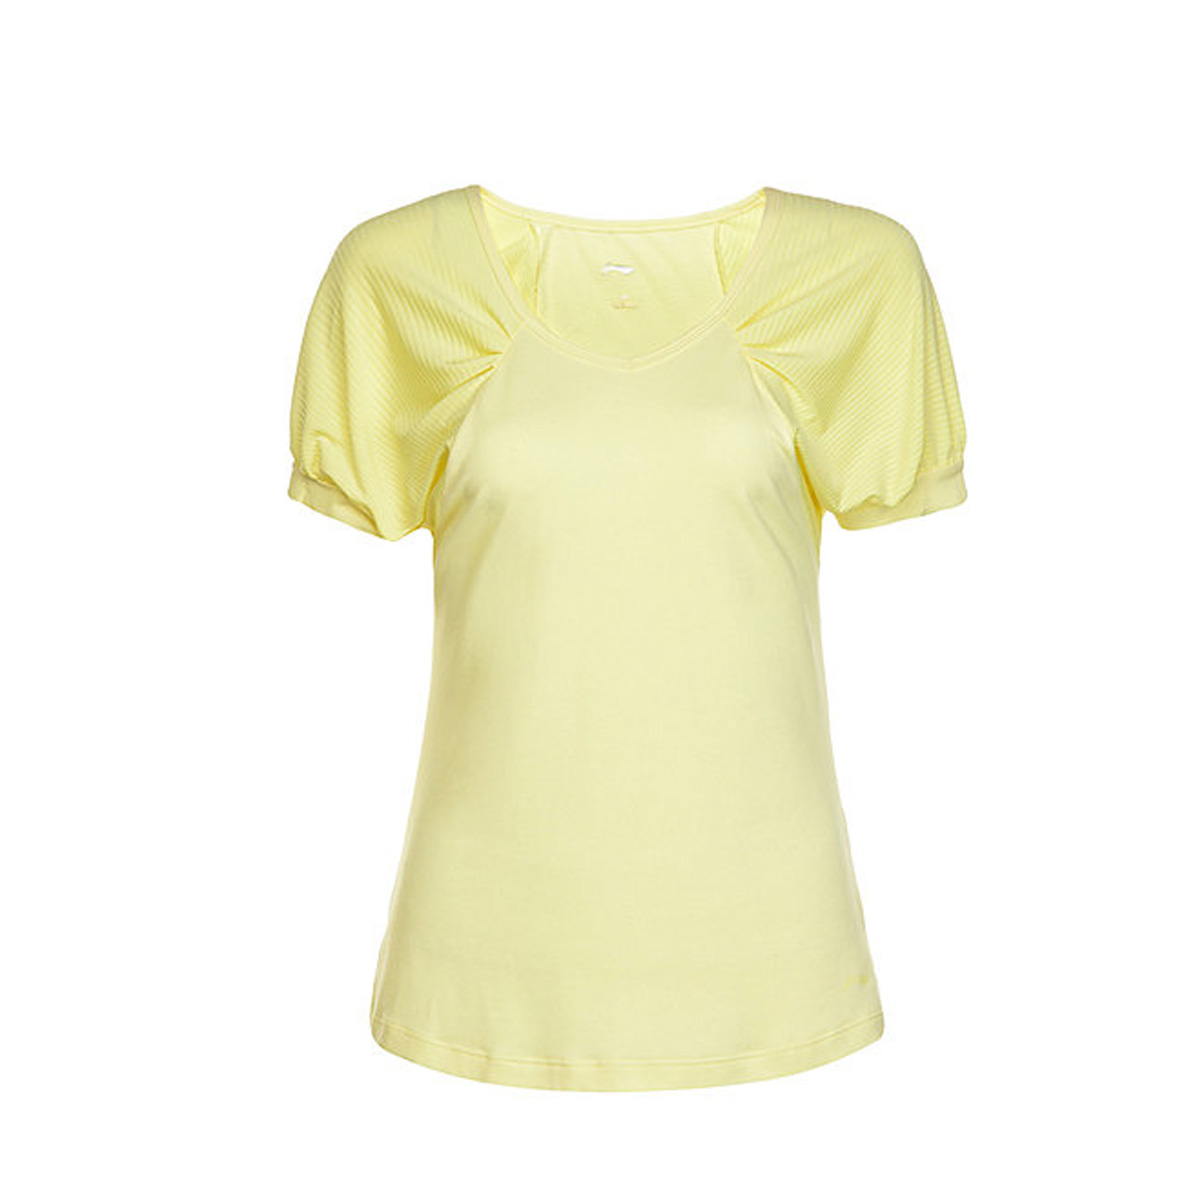 Женская футболка LI-NING LNCH082-2 (размеры: L, XL, 2XL). 